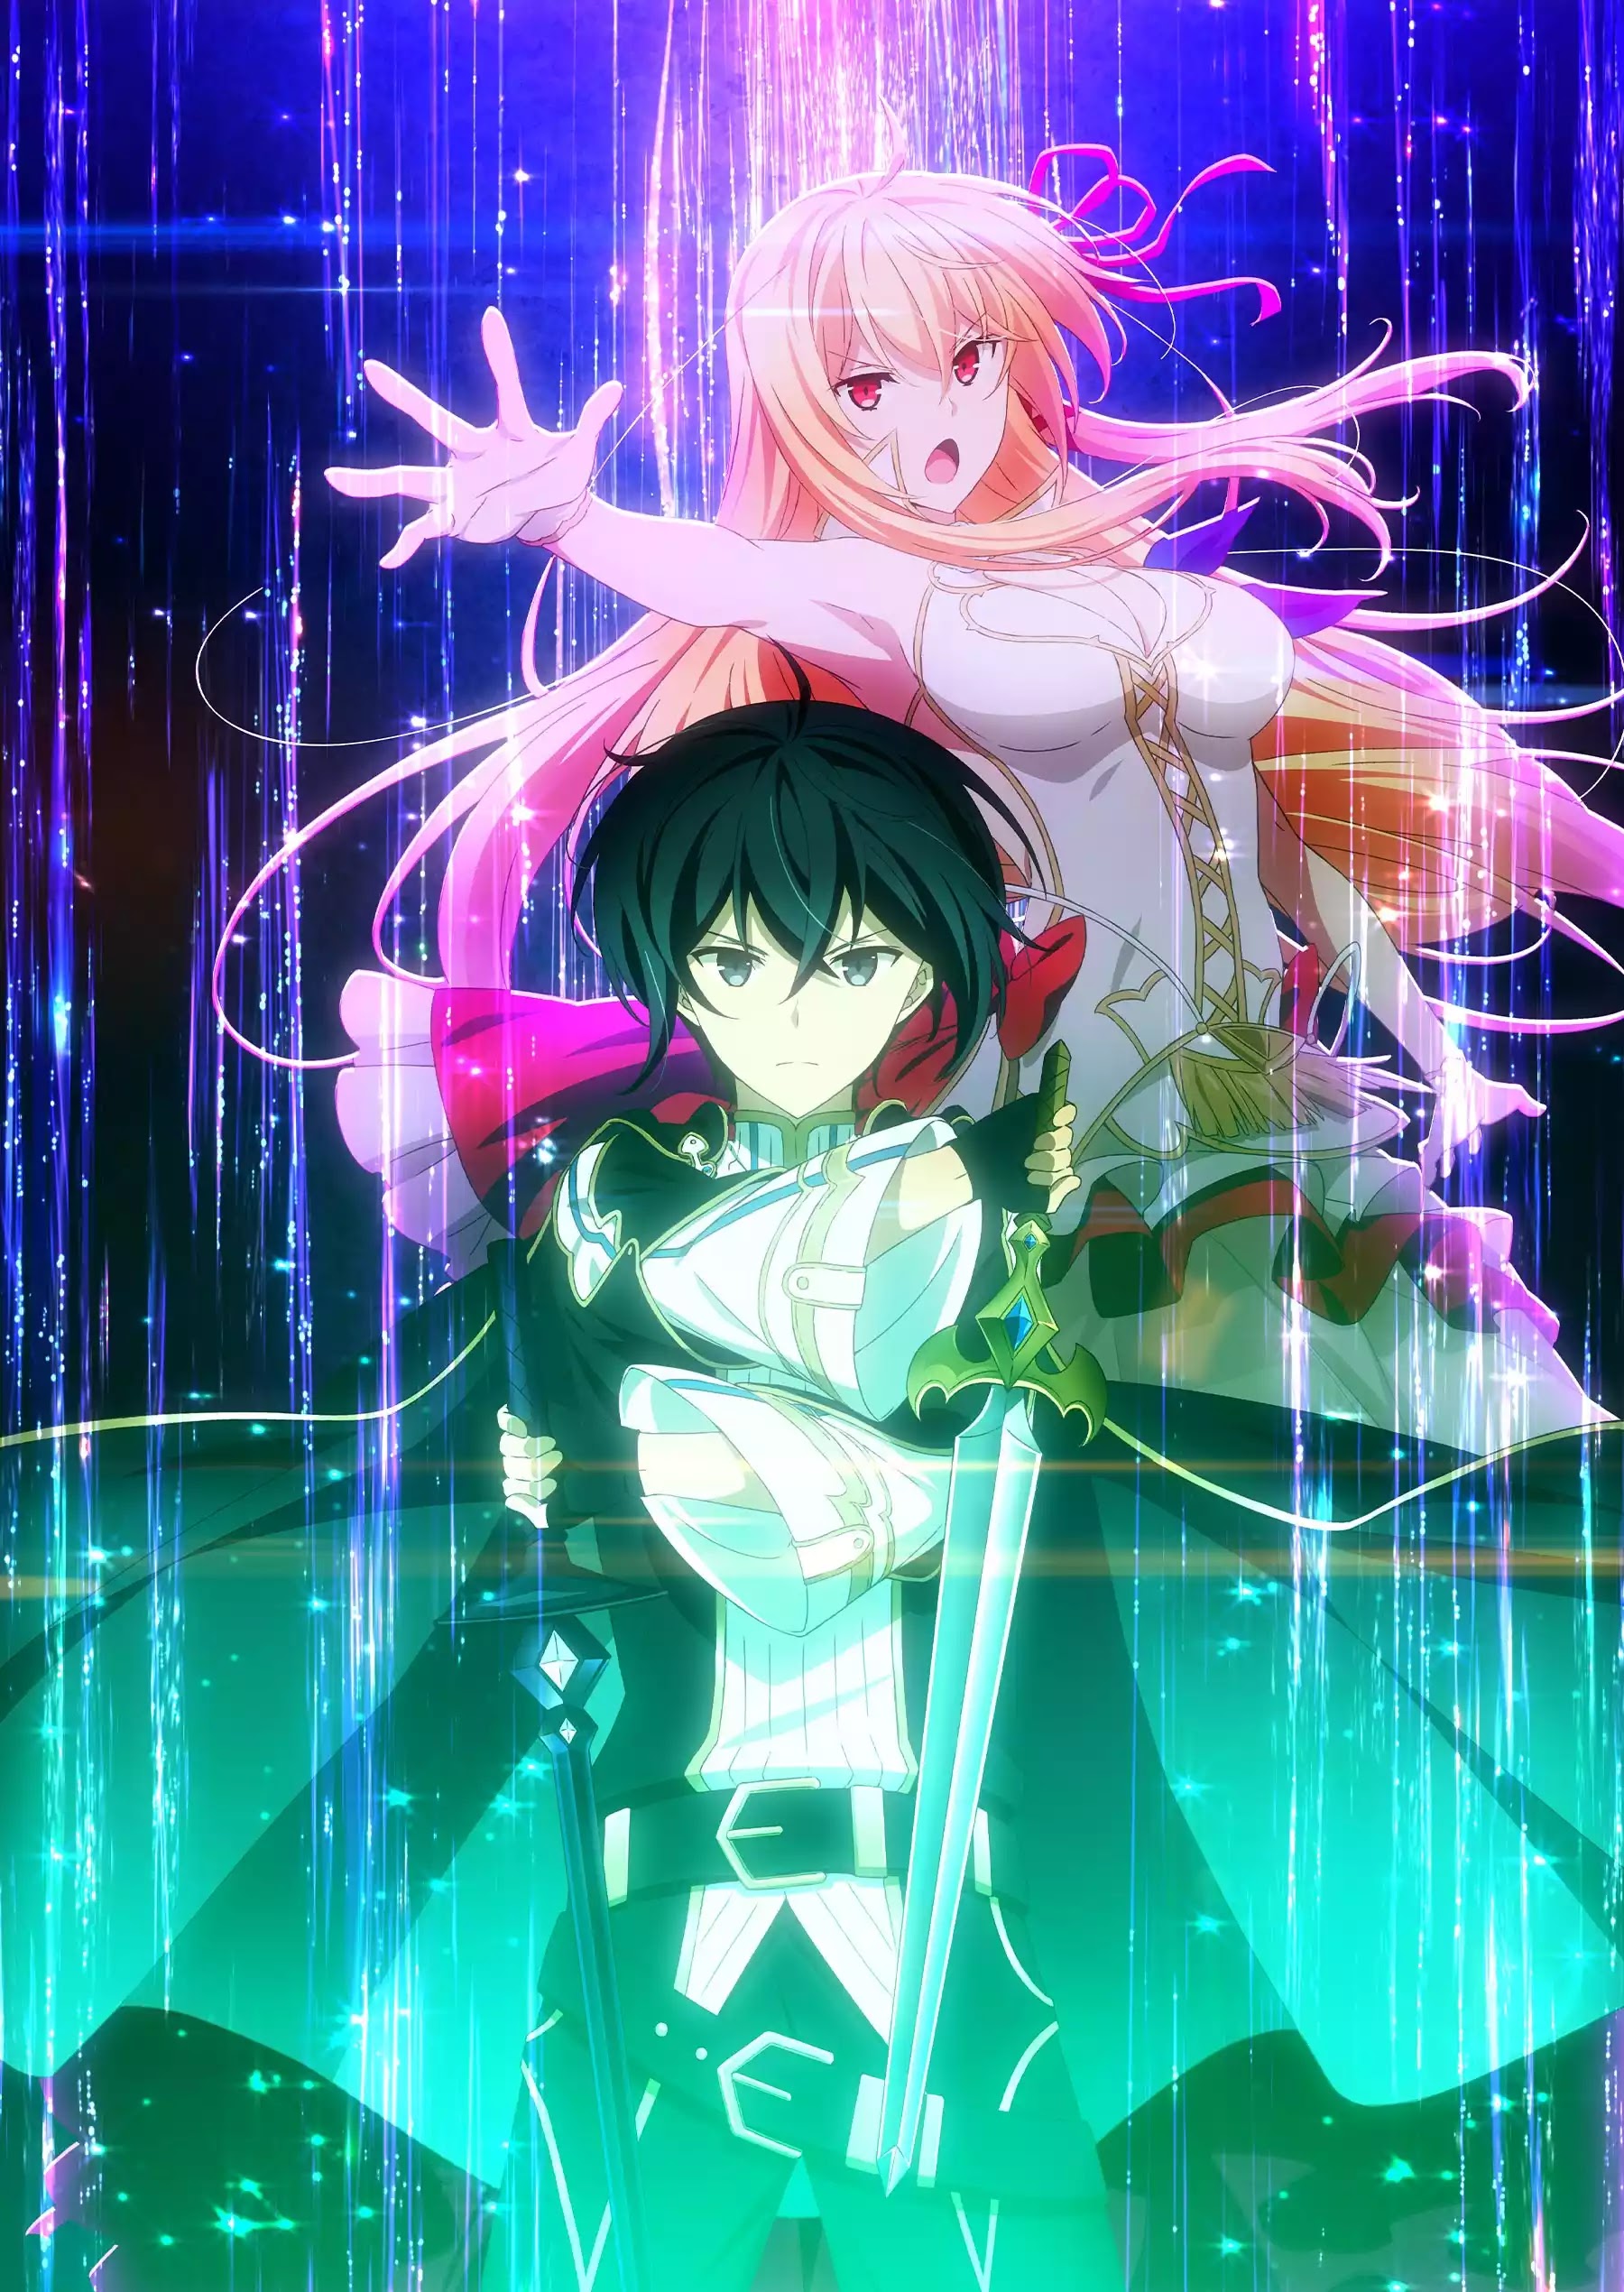 Kimisen - Romance entre inimigos ganha 2ª temporada - AnimeNew